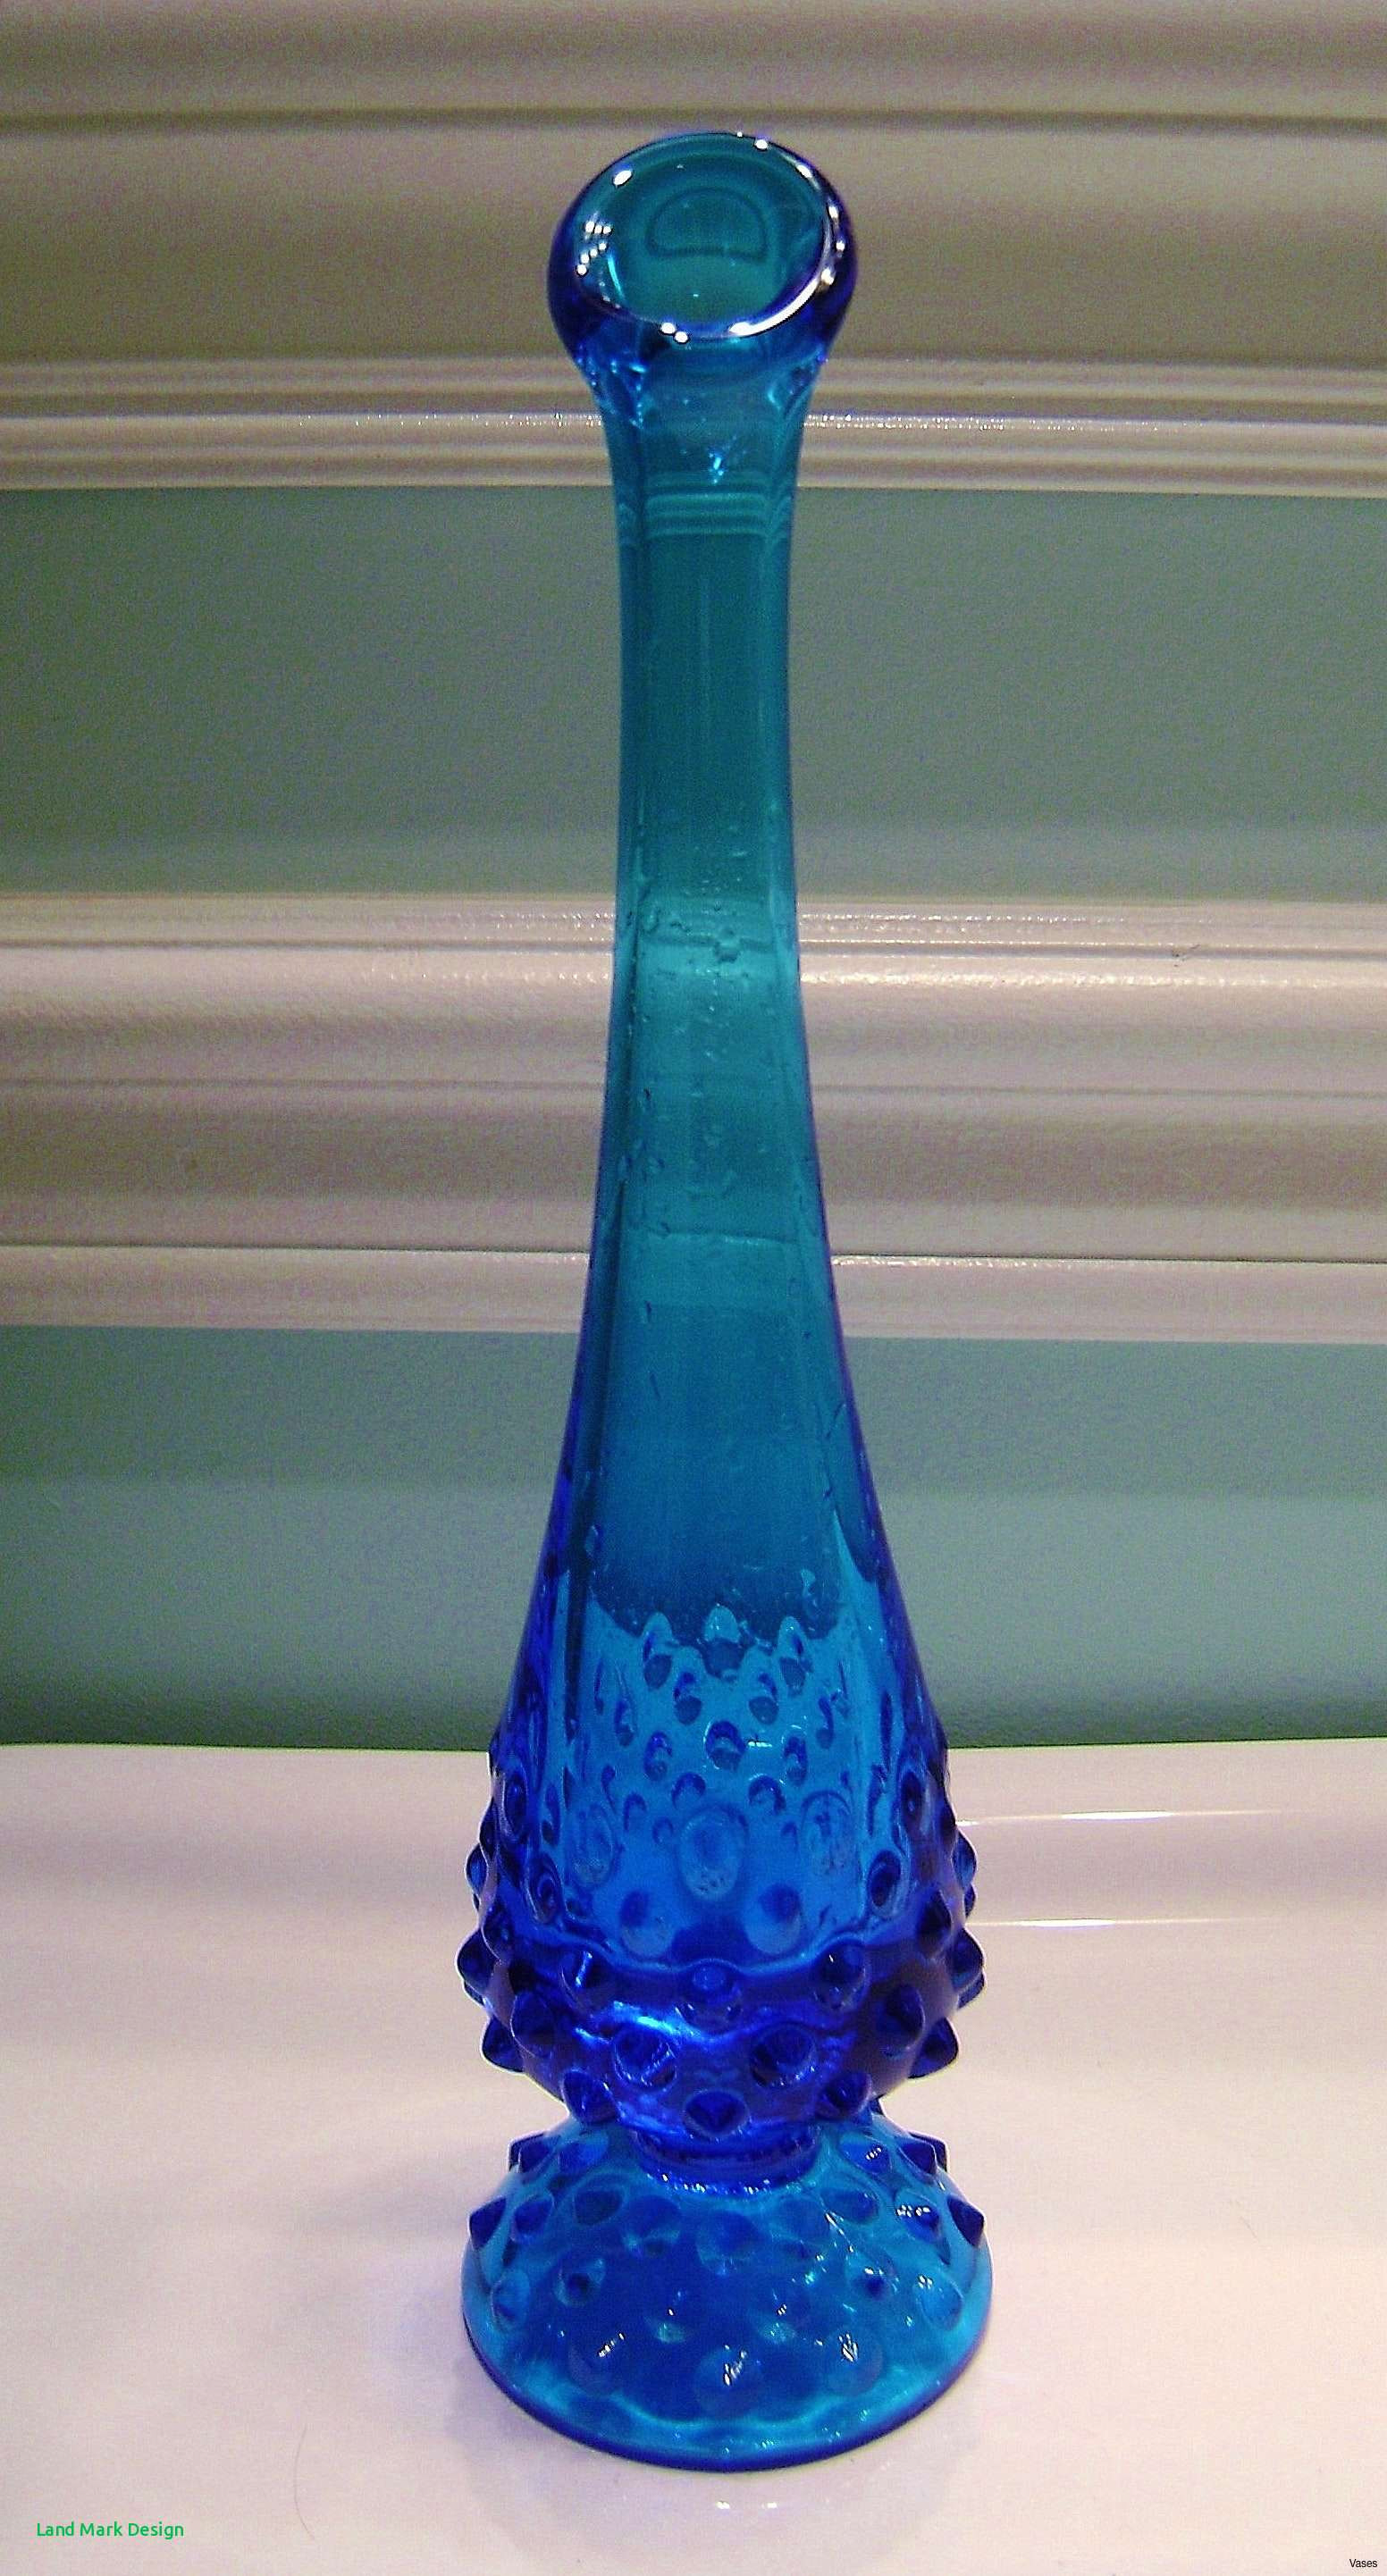 light up vases weddings of light blue vase photos light aqua color vases artificial plants within light blue vase photos light aqua color of light blue vase photos light aqua color